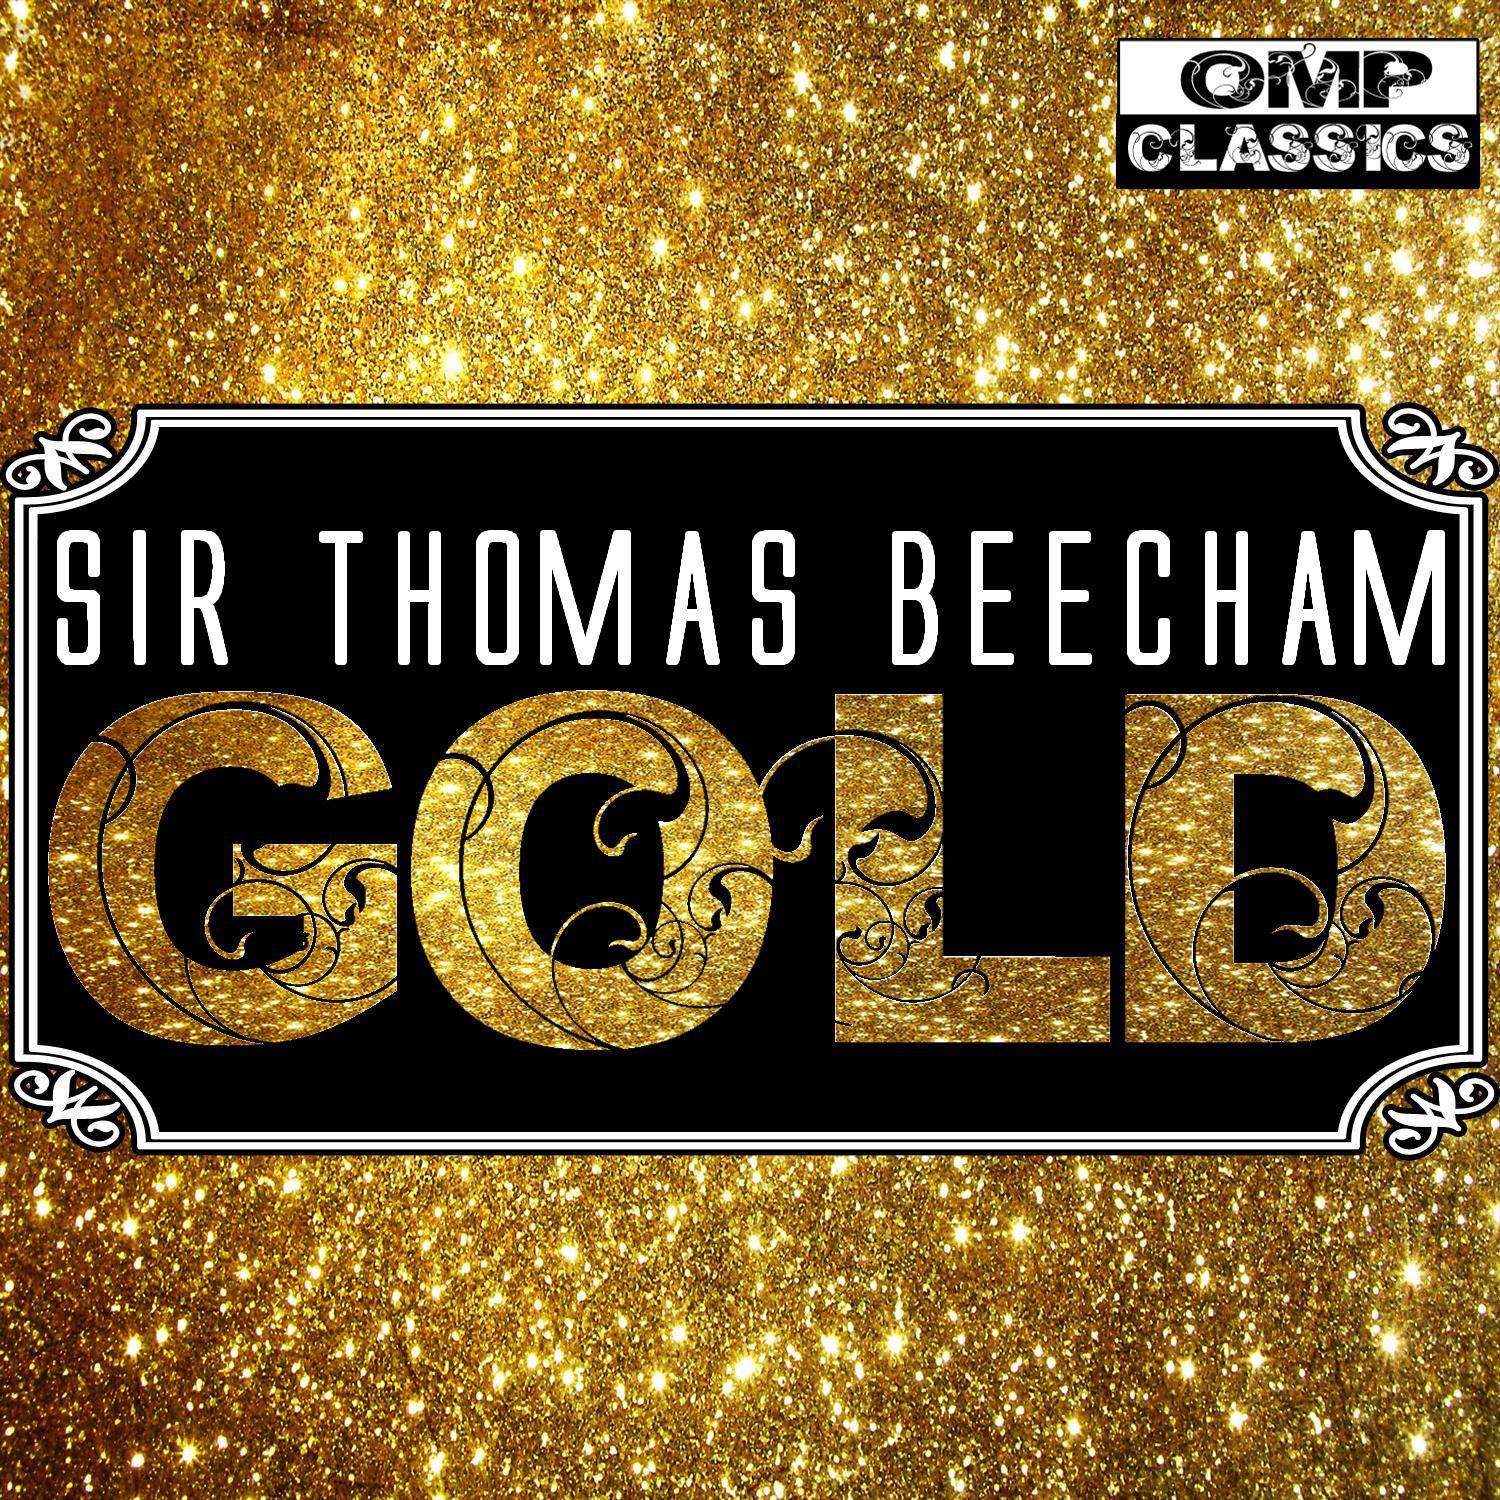 Sir Thomas Beecham Gold